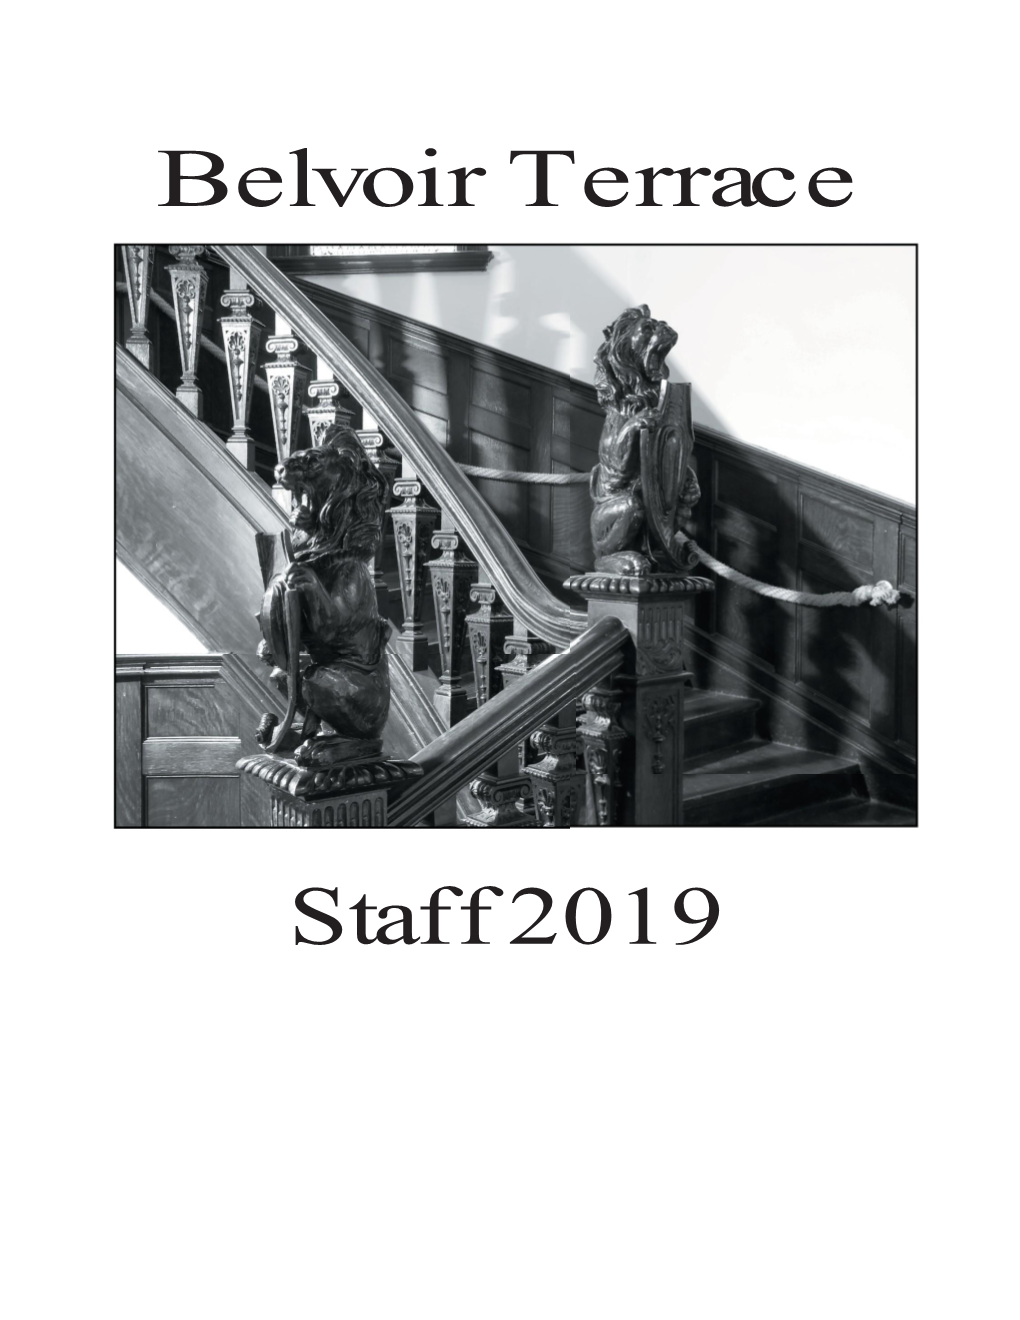 Belvoir Terrace Staff 2019